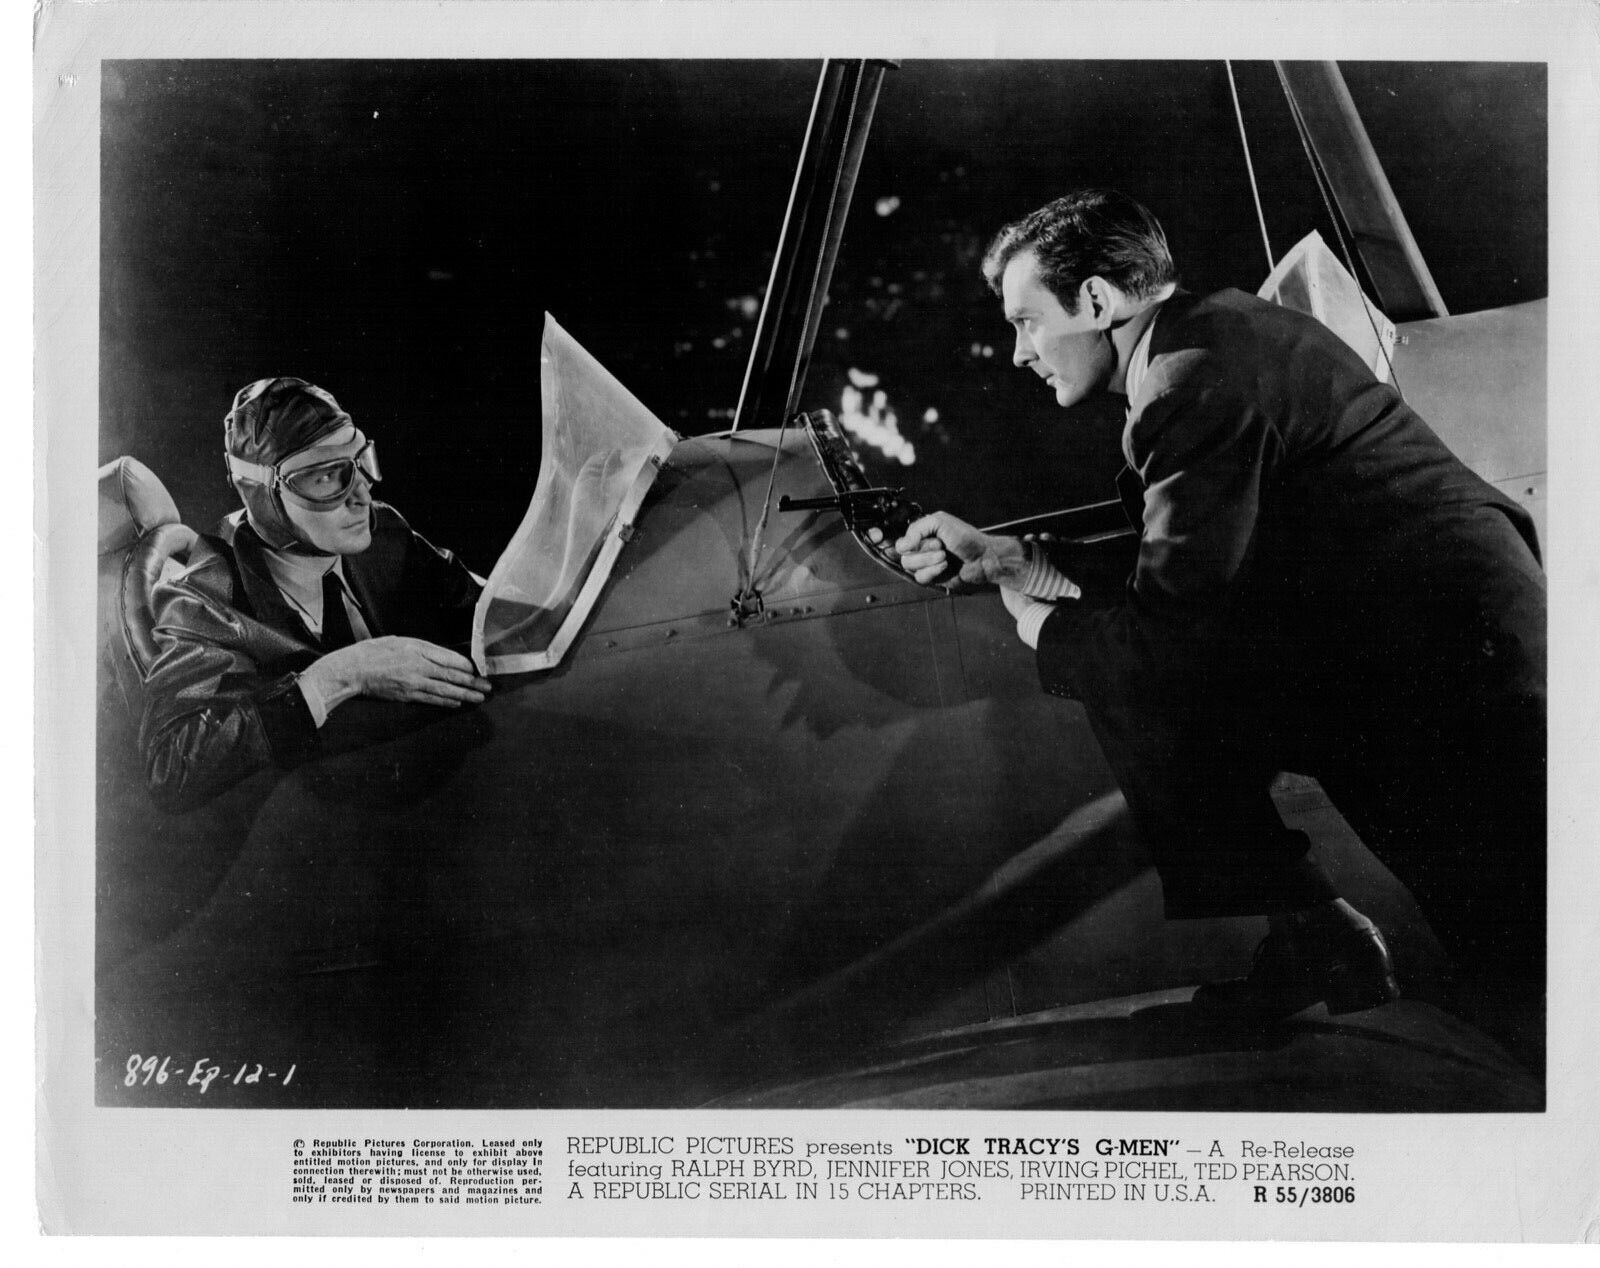 VTG 8x10 B&W Movie Still Photo Ralph Byrd Dick Tracy\'s G-Men 1955R Republic Pic